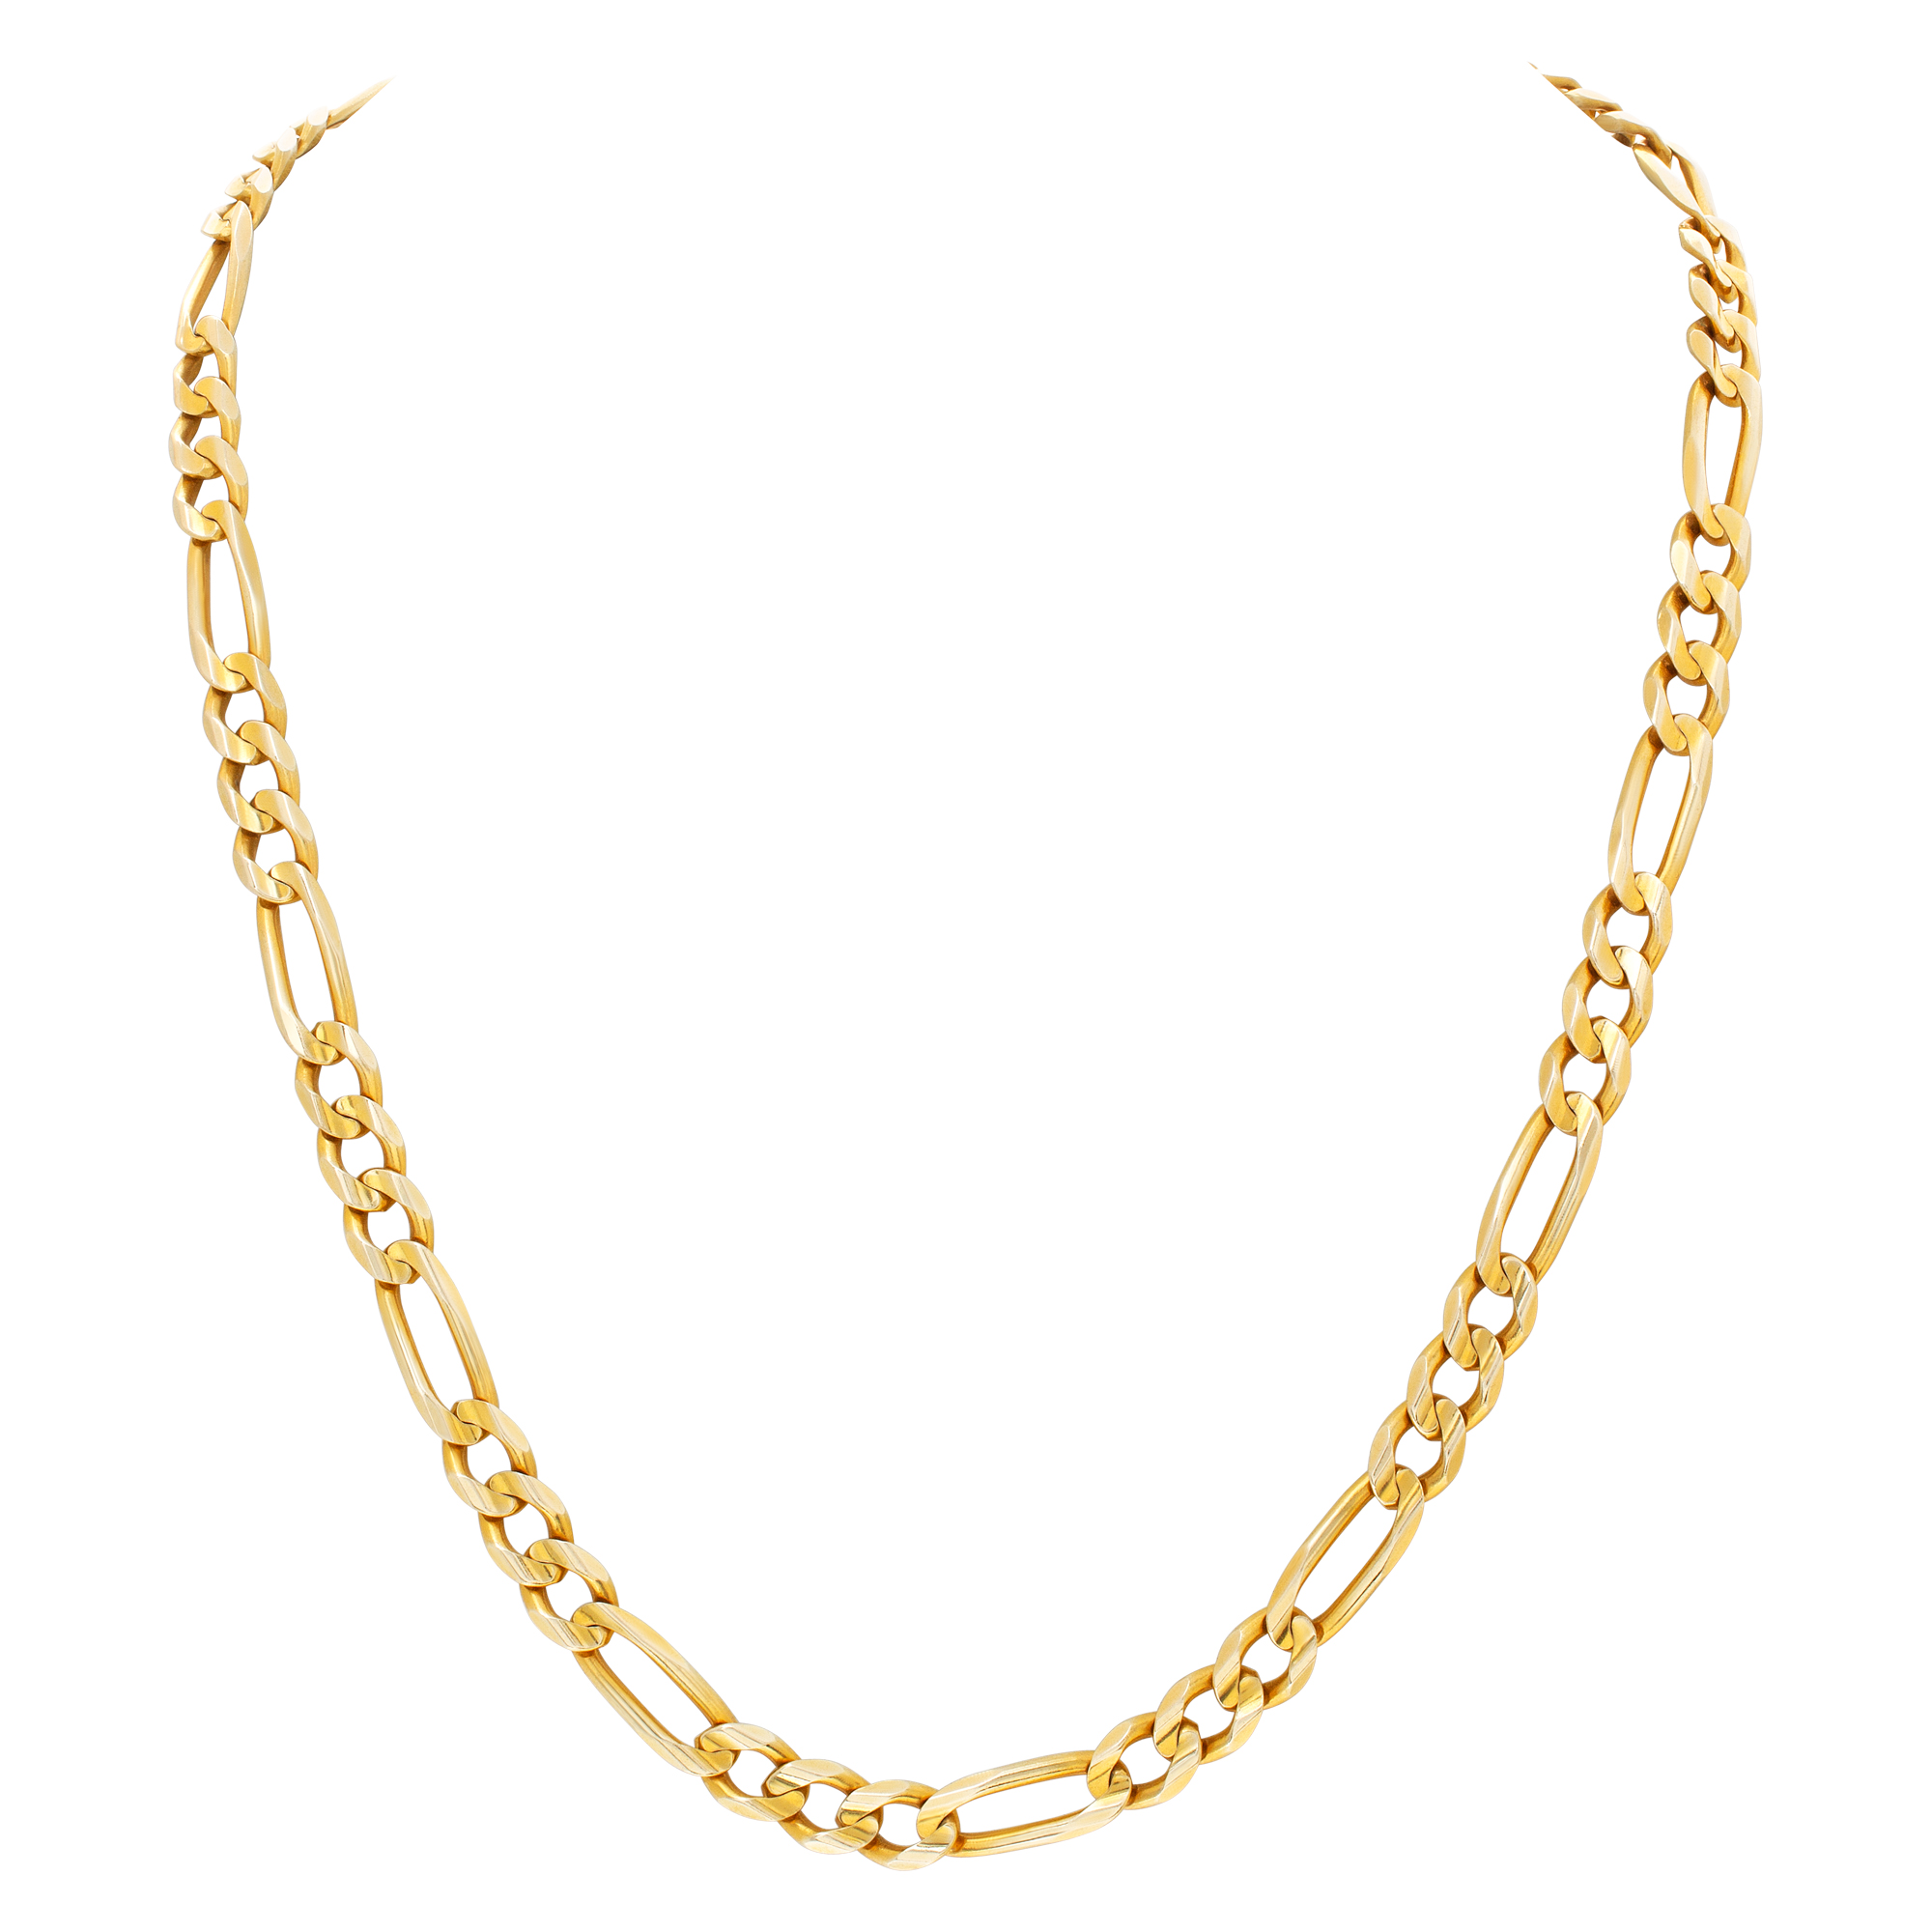 Figaro link necklace in 14k, 20" image 1